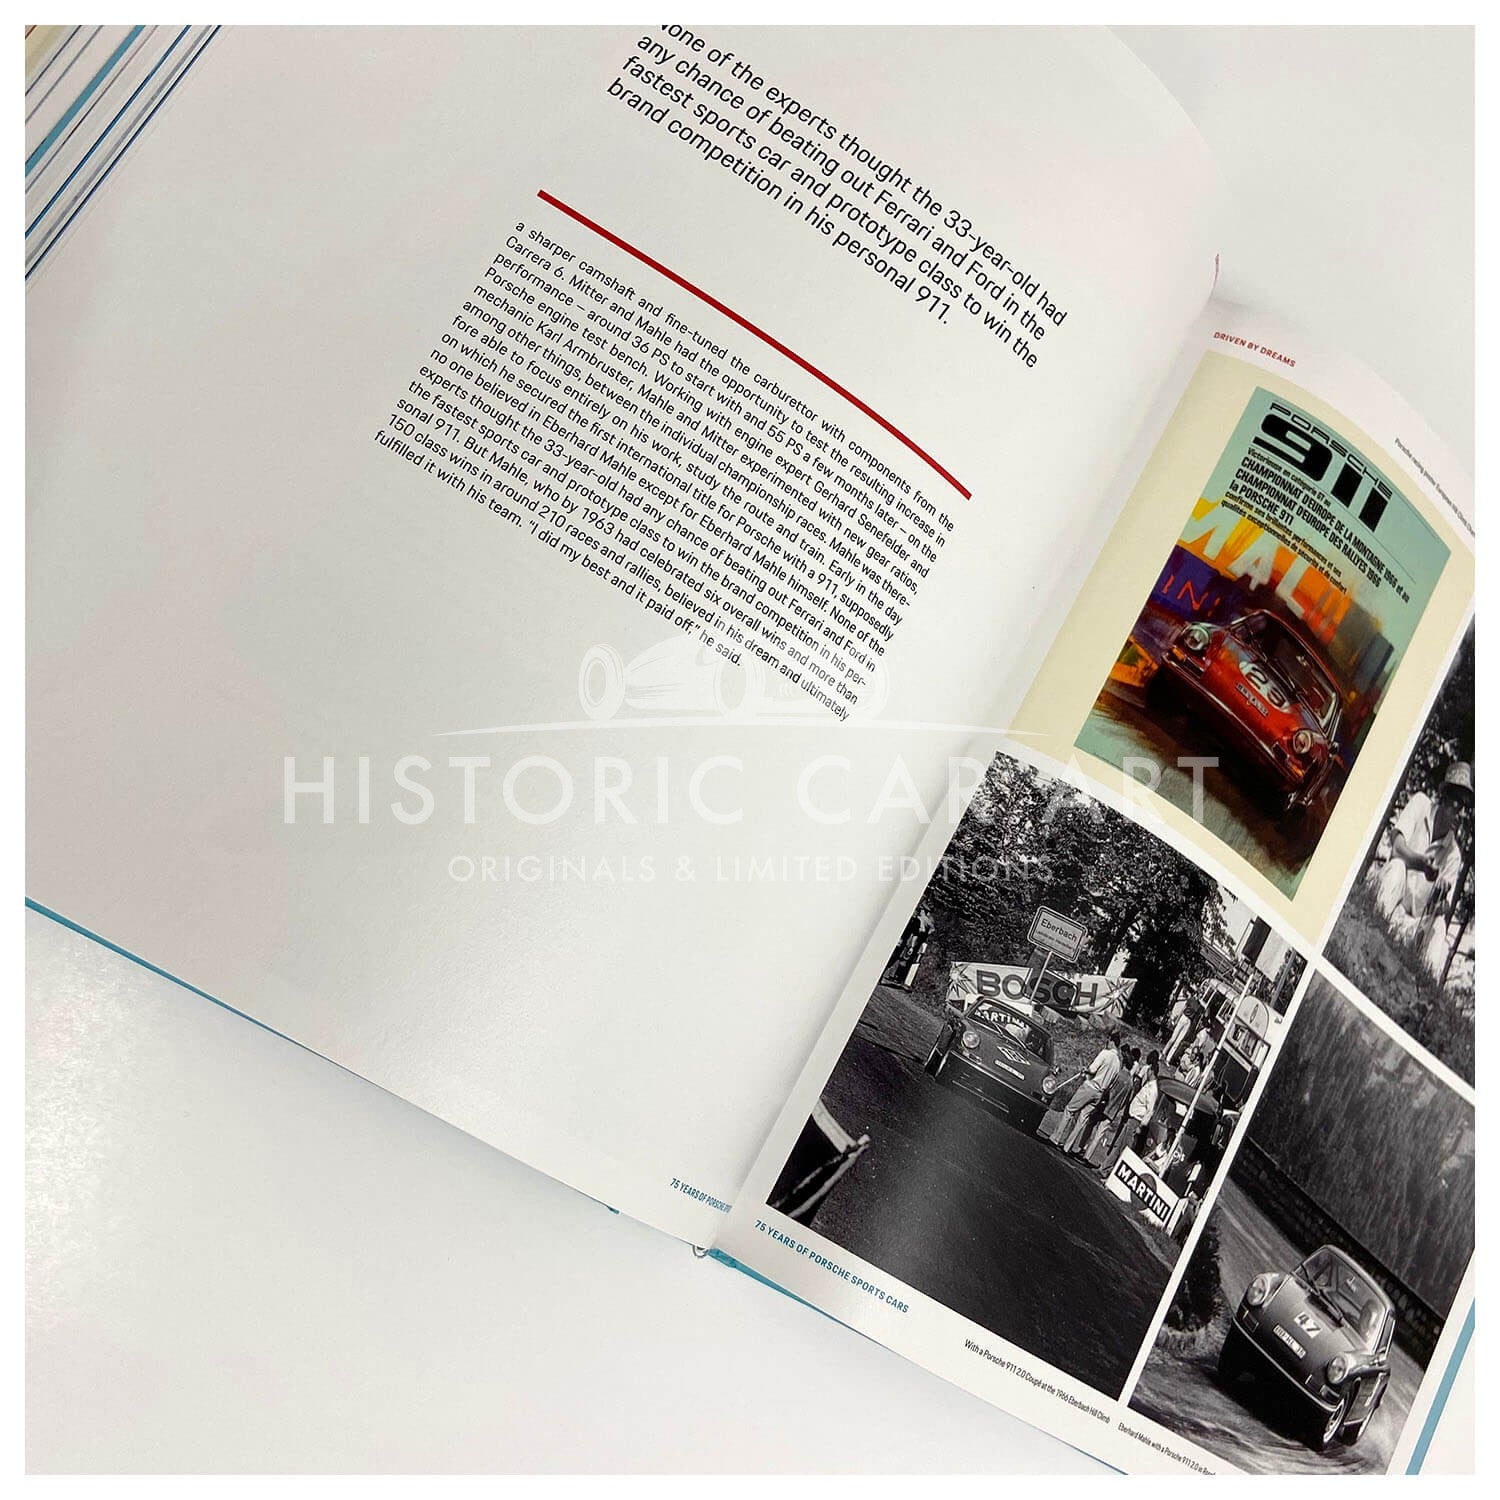 Driven By Dreams | Porsche 75 Years | Book & Print